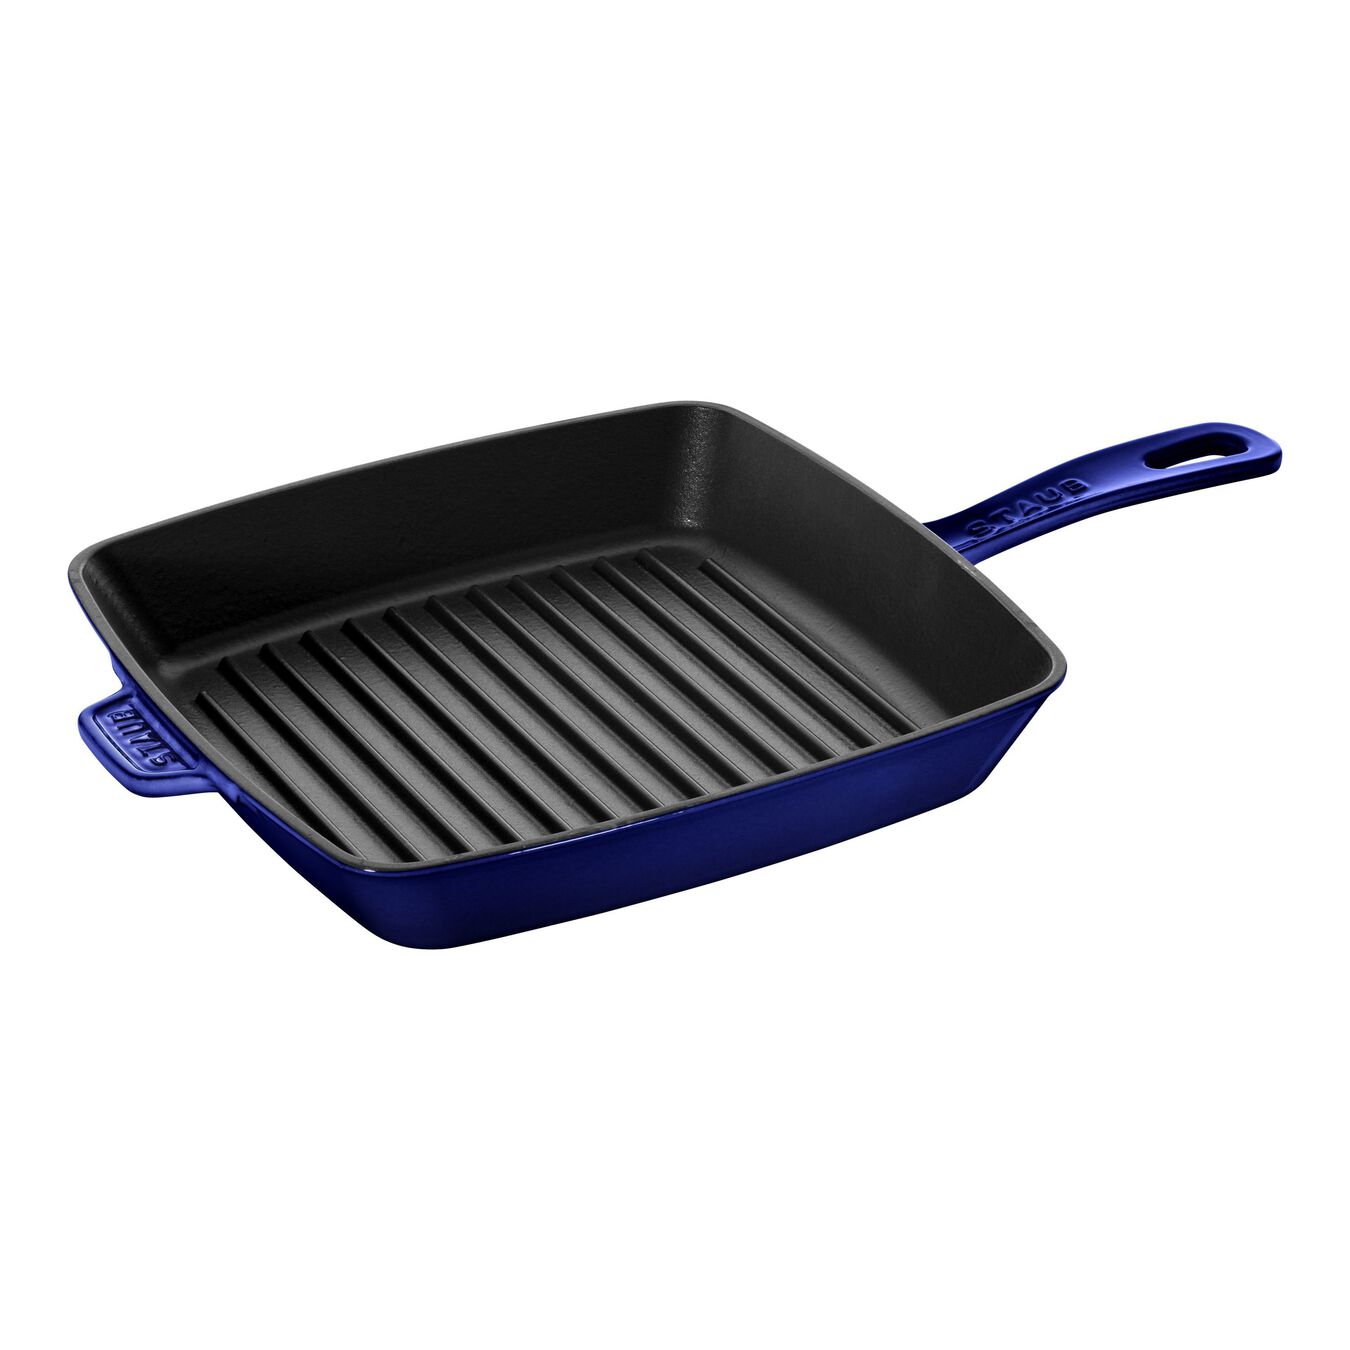 30 cm cast iron square American grill, dark-blue,,large 1